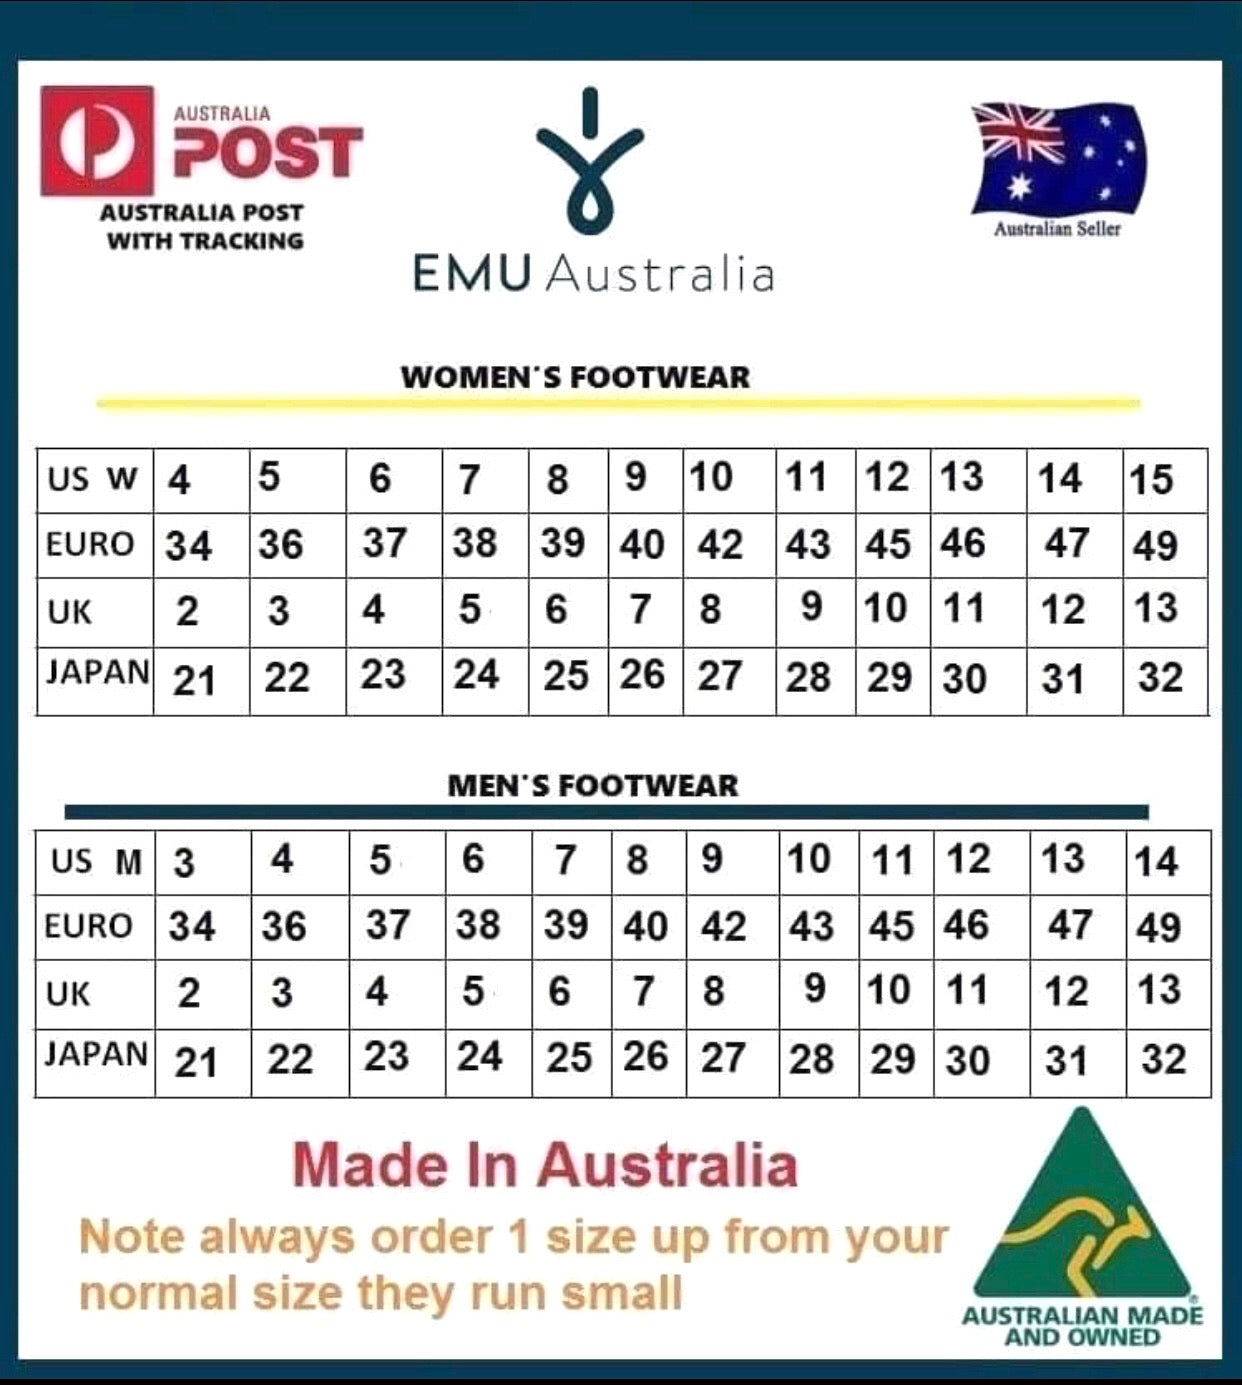 Emu Australia Black Yancoal Zip Sheepskin Waterproof Waxy Leather Boots Made In Australia